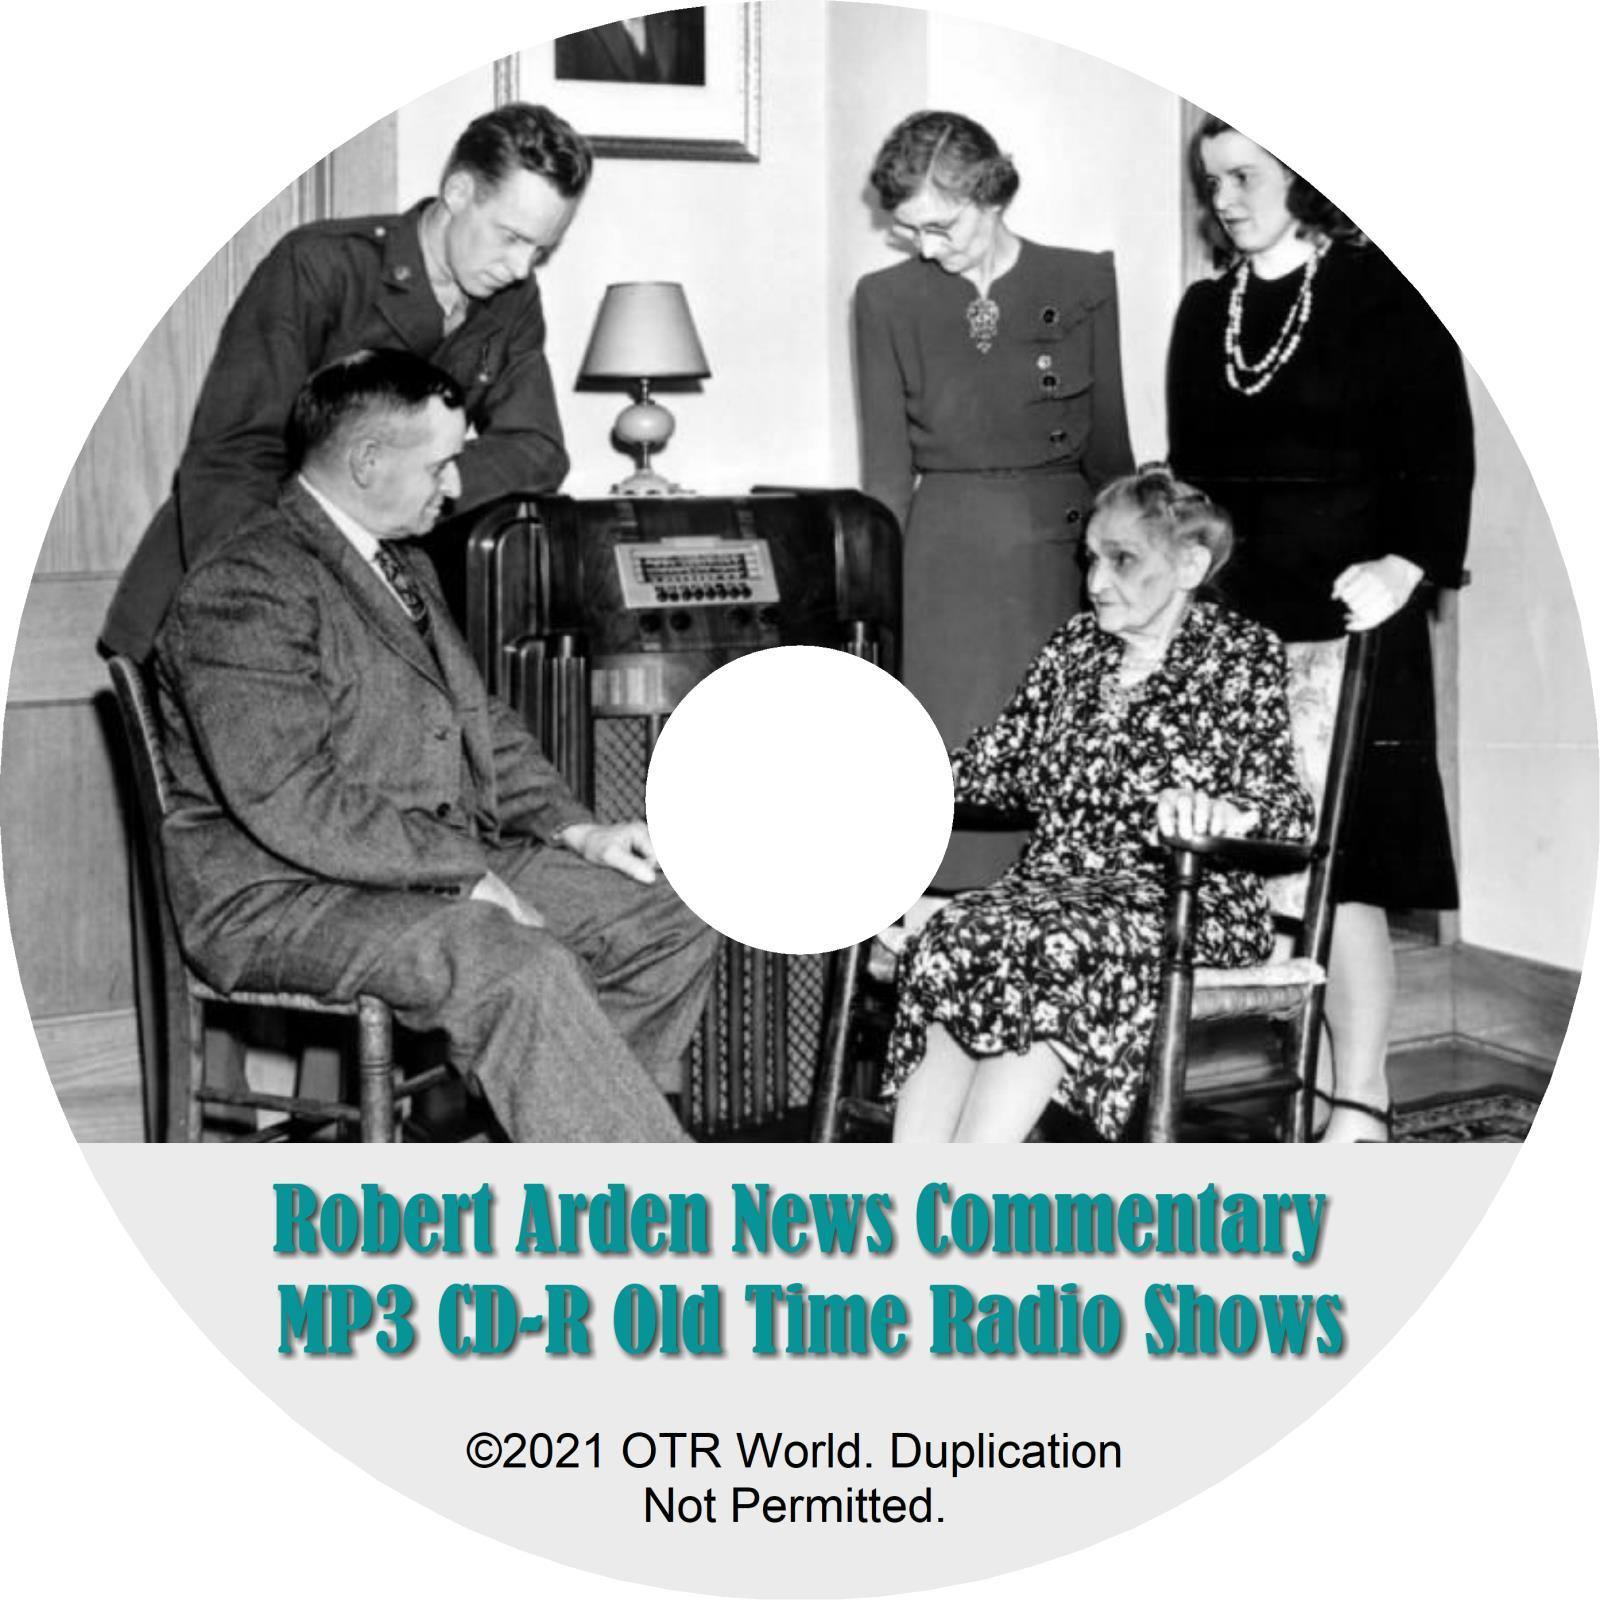 Robert Arden News Commentary OTR OTRS Old Time Radio Shows MP3 On CD-R 9 Episode - OTR World